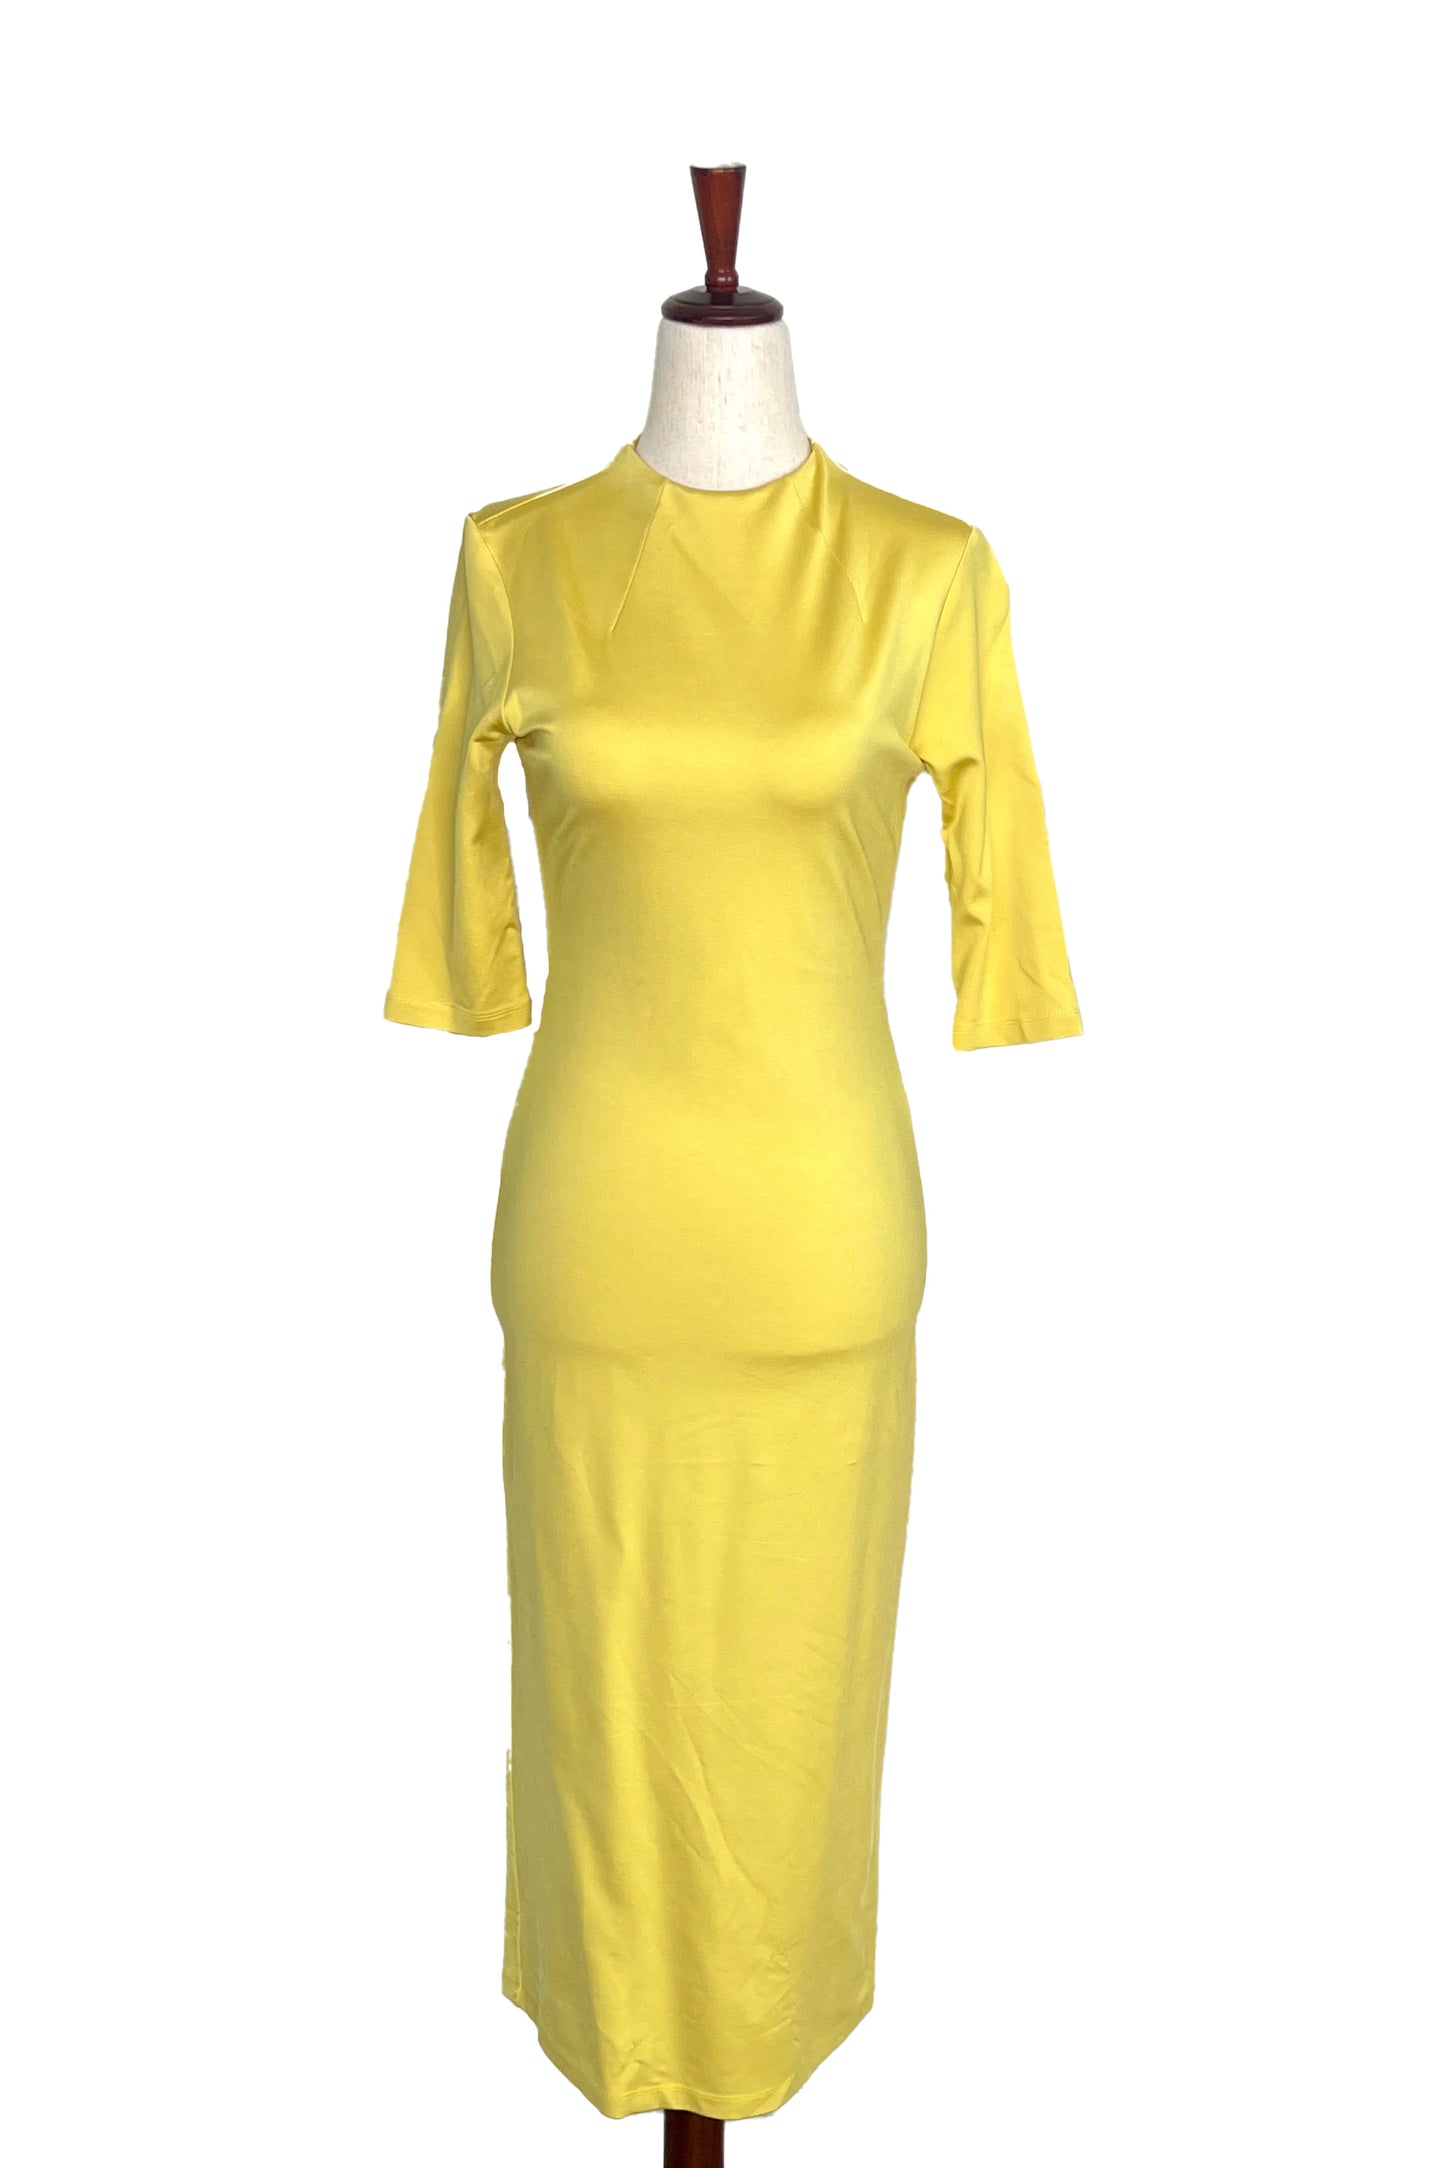 ALICE & OLIVIA - Yellow Mock Neck Midi Length Dress - Size 4